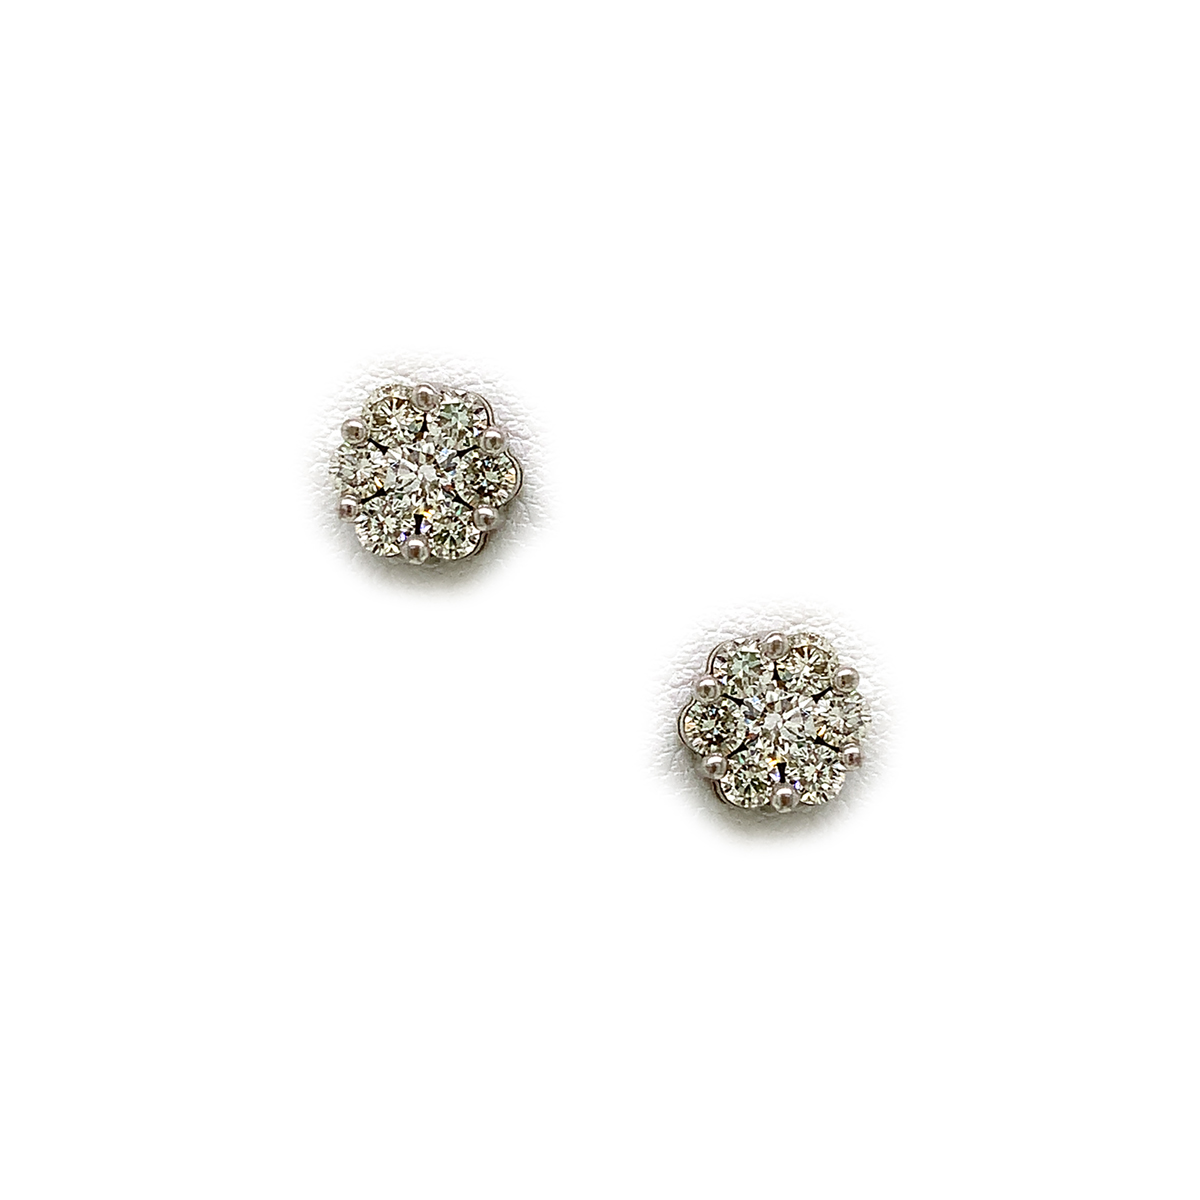 10 Karat White Gold Diamond Cluster Earrings 1.0 Carats